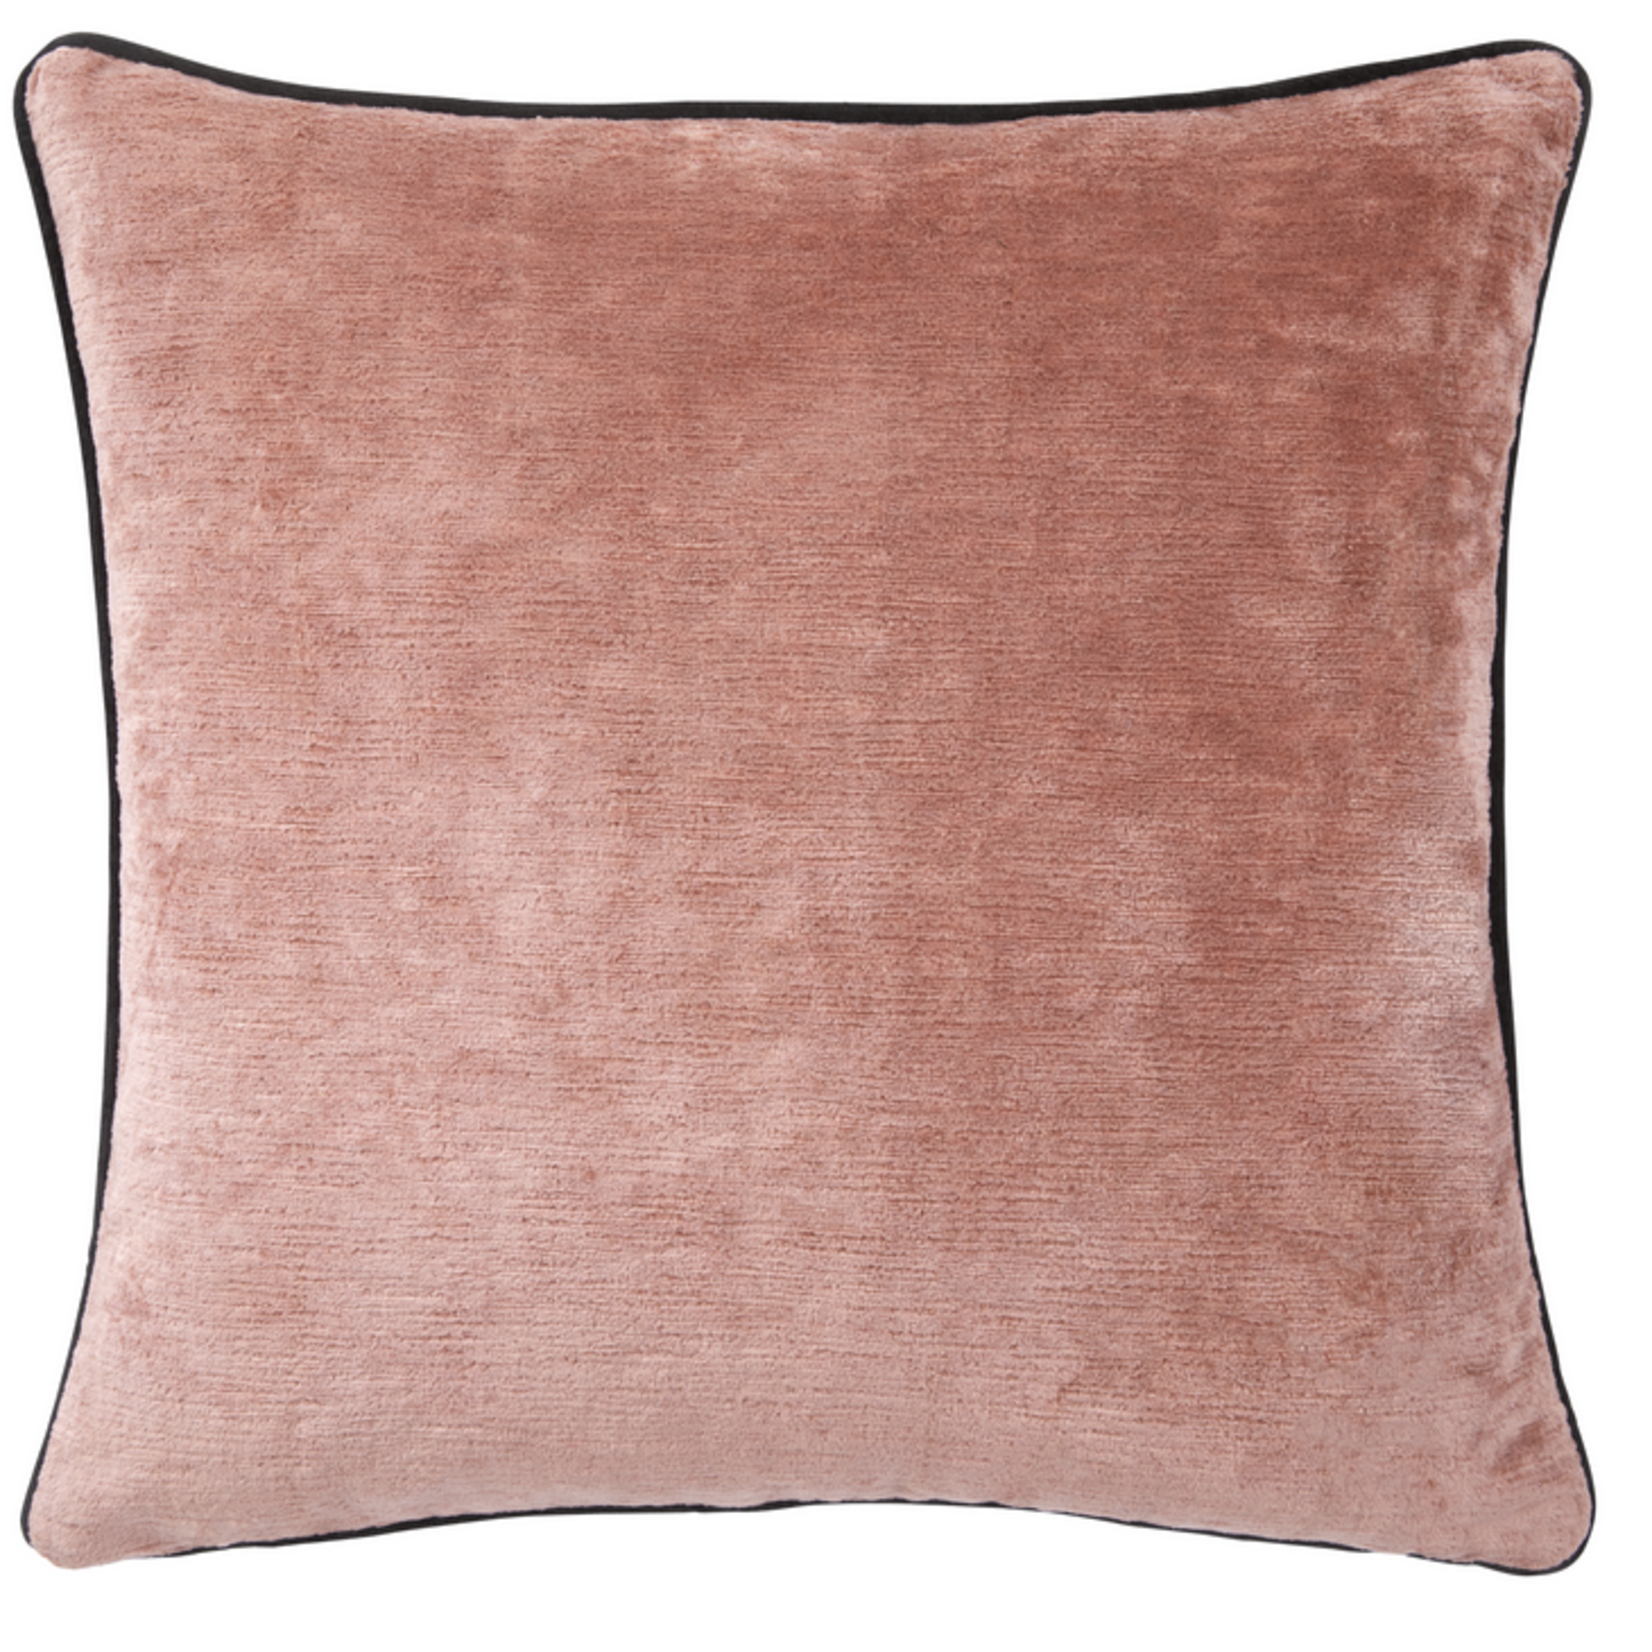 BOROMEE Decorative Pillow